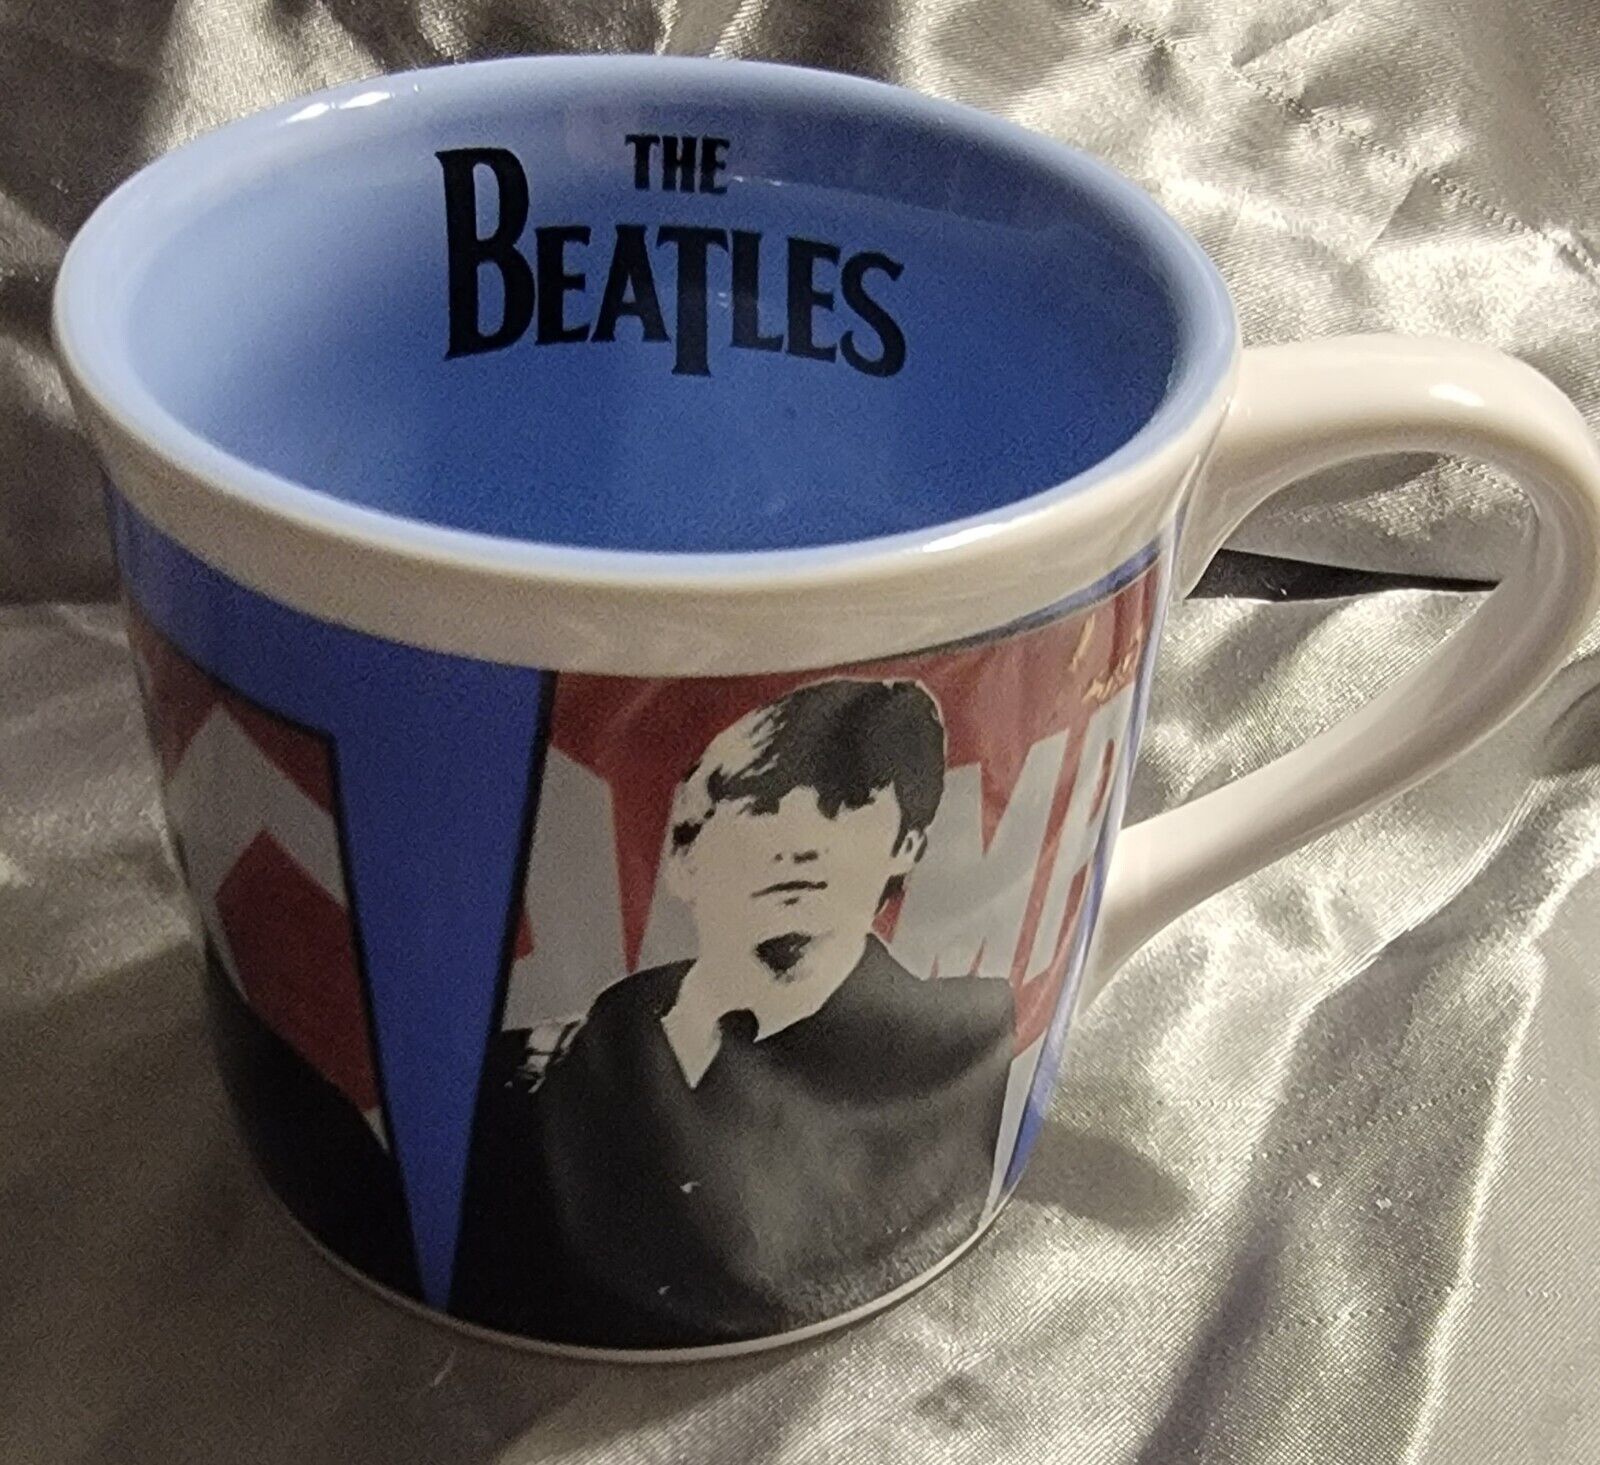 The Beatles Tea Coffee Mug Cup Blue Inside 2006 Apple Corps Limited Licensed